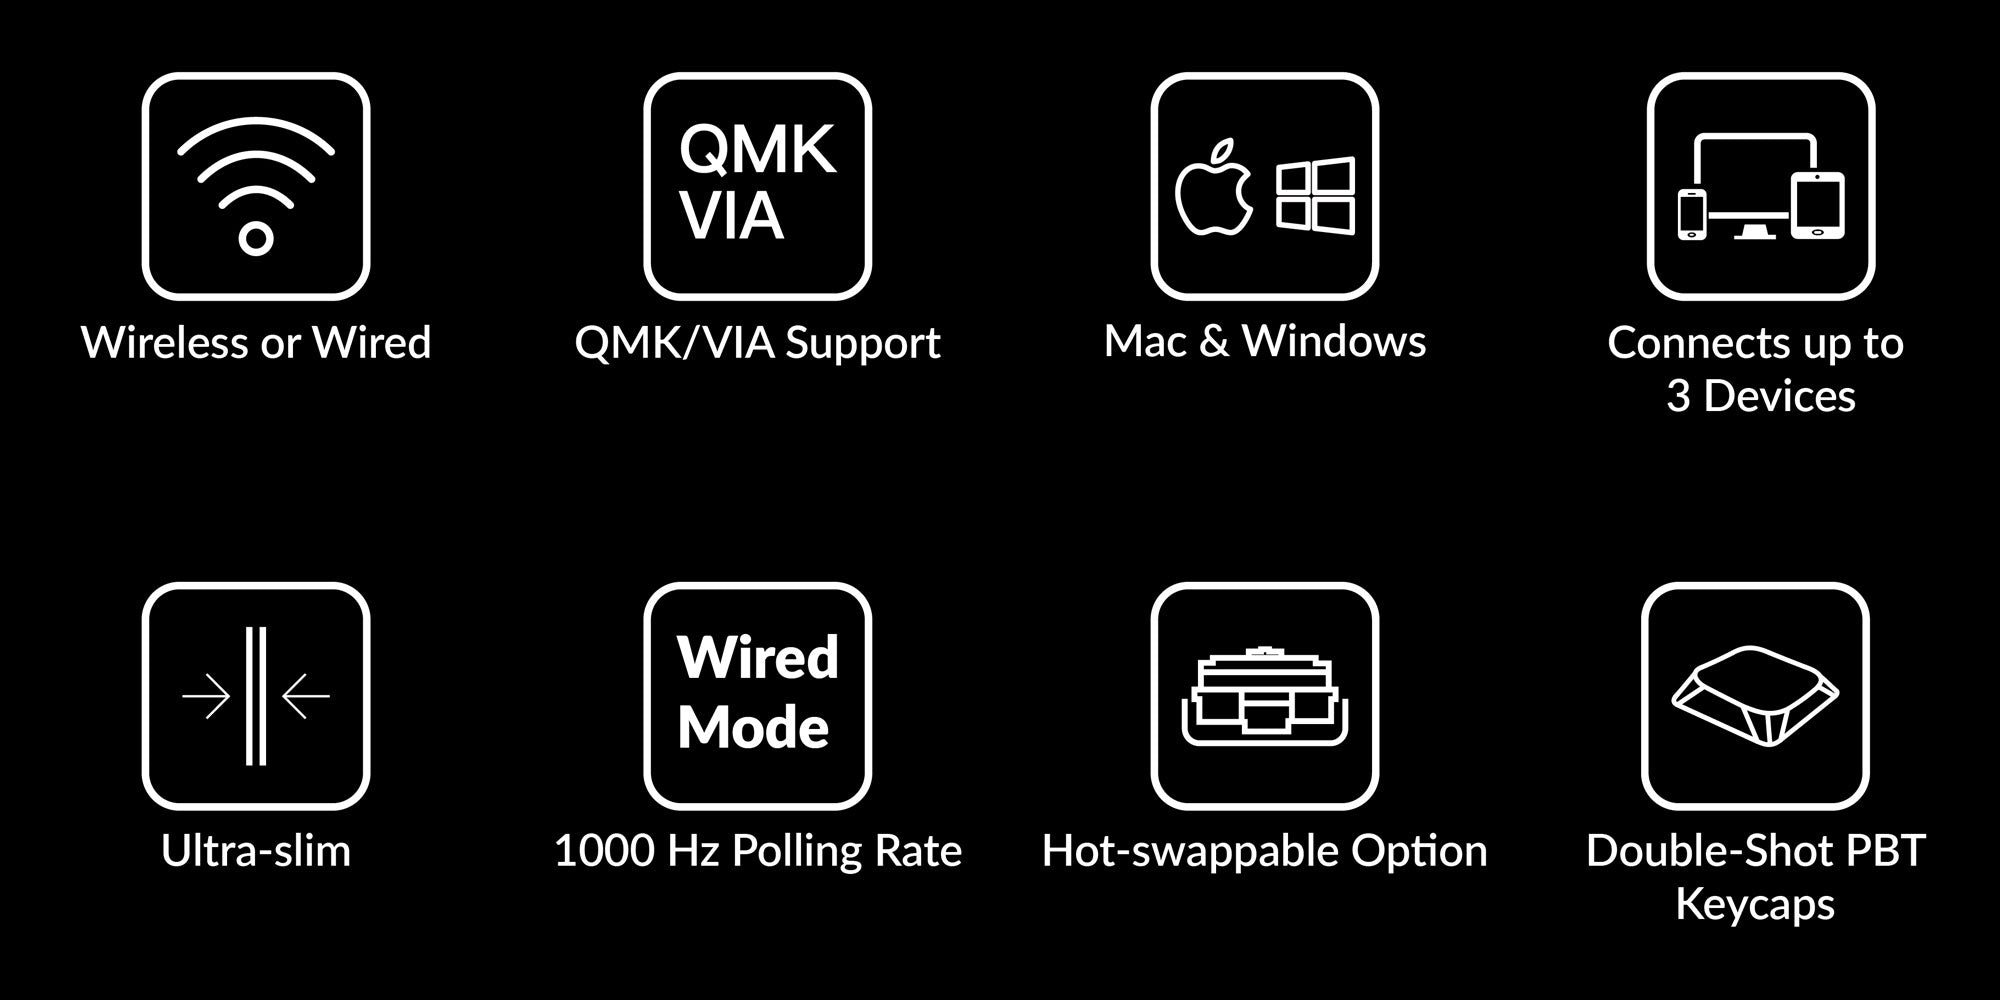 Features of Keychron K7 Pro QMK/VIA low profile wireless mechanical keyboard